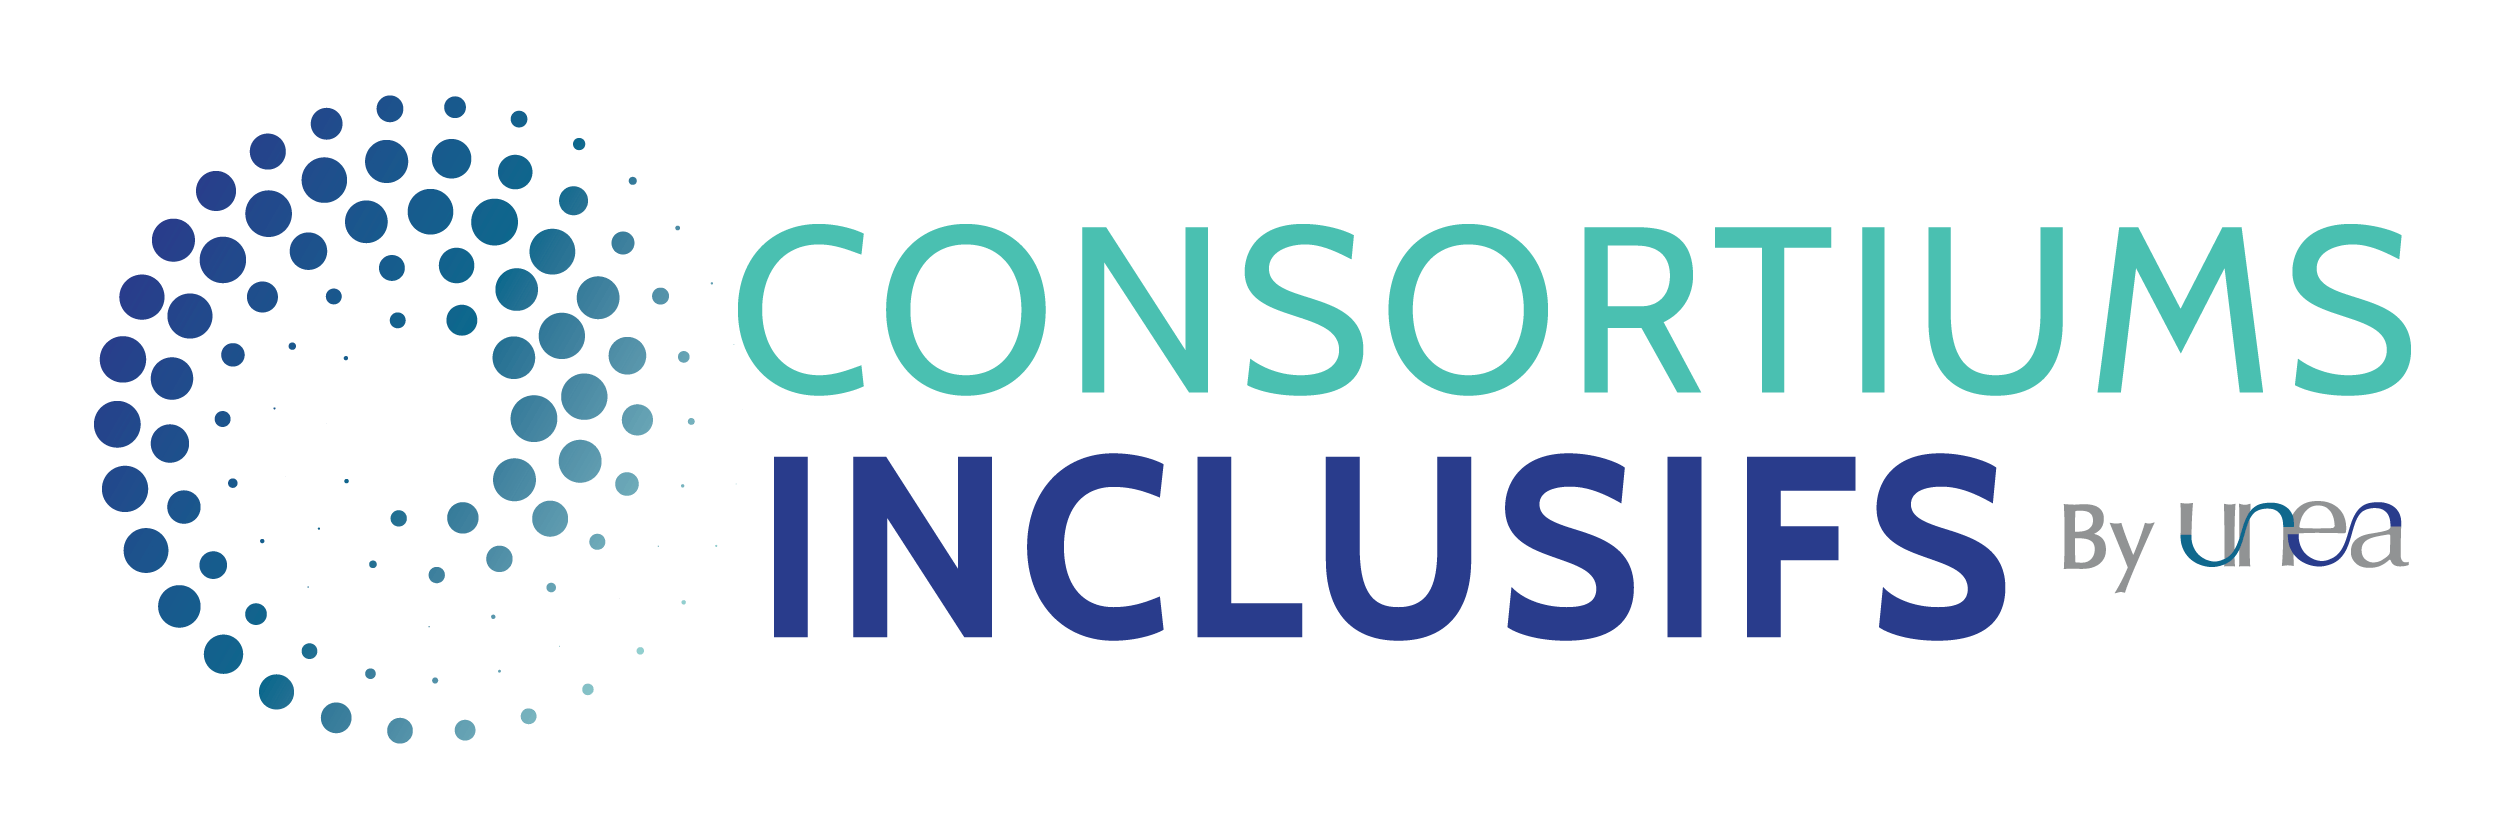 Consortiums Inclusifs